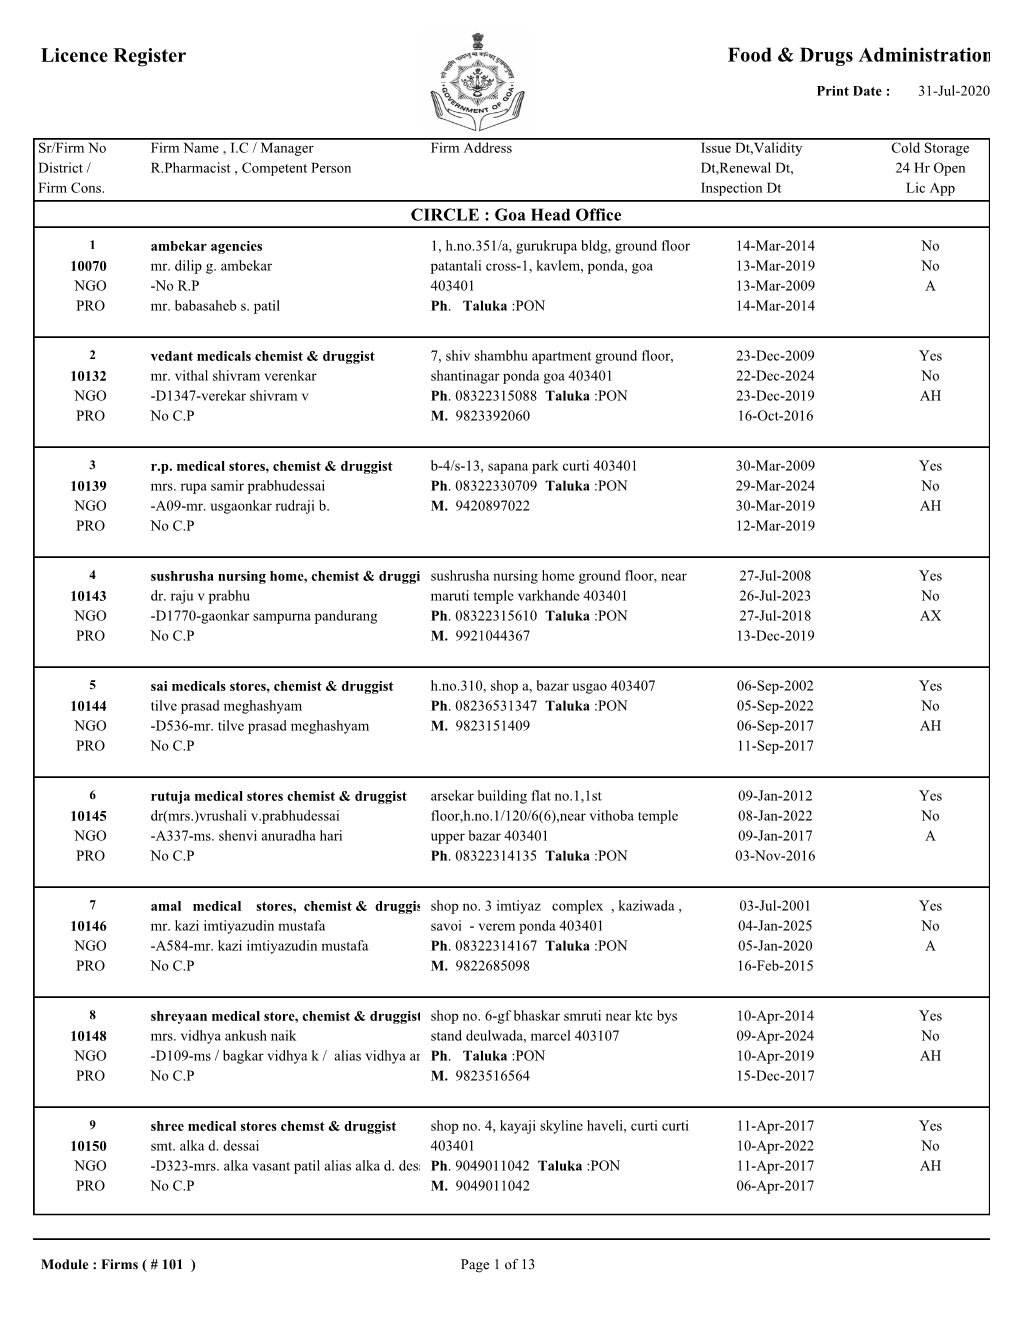 Indicative Pharmacy List for Oximeter-Ponda